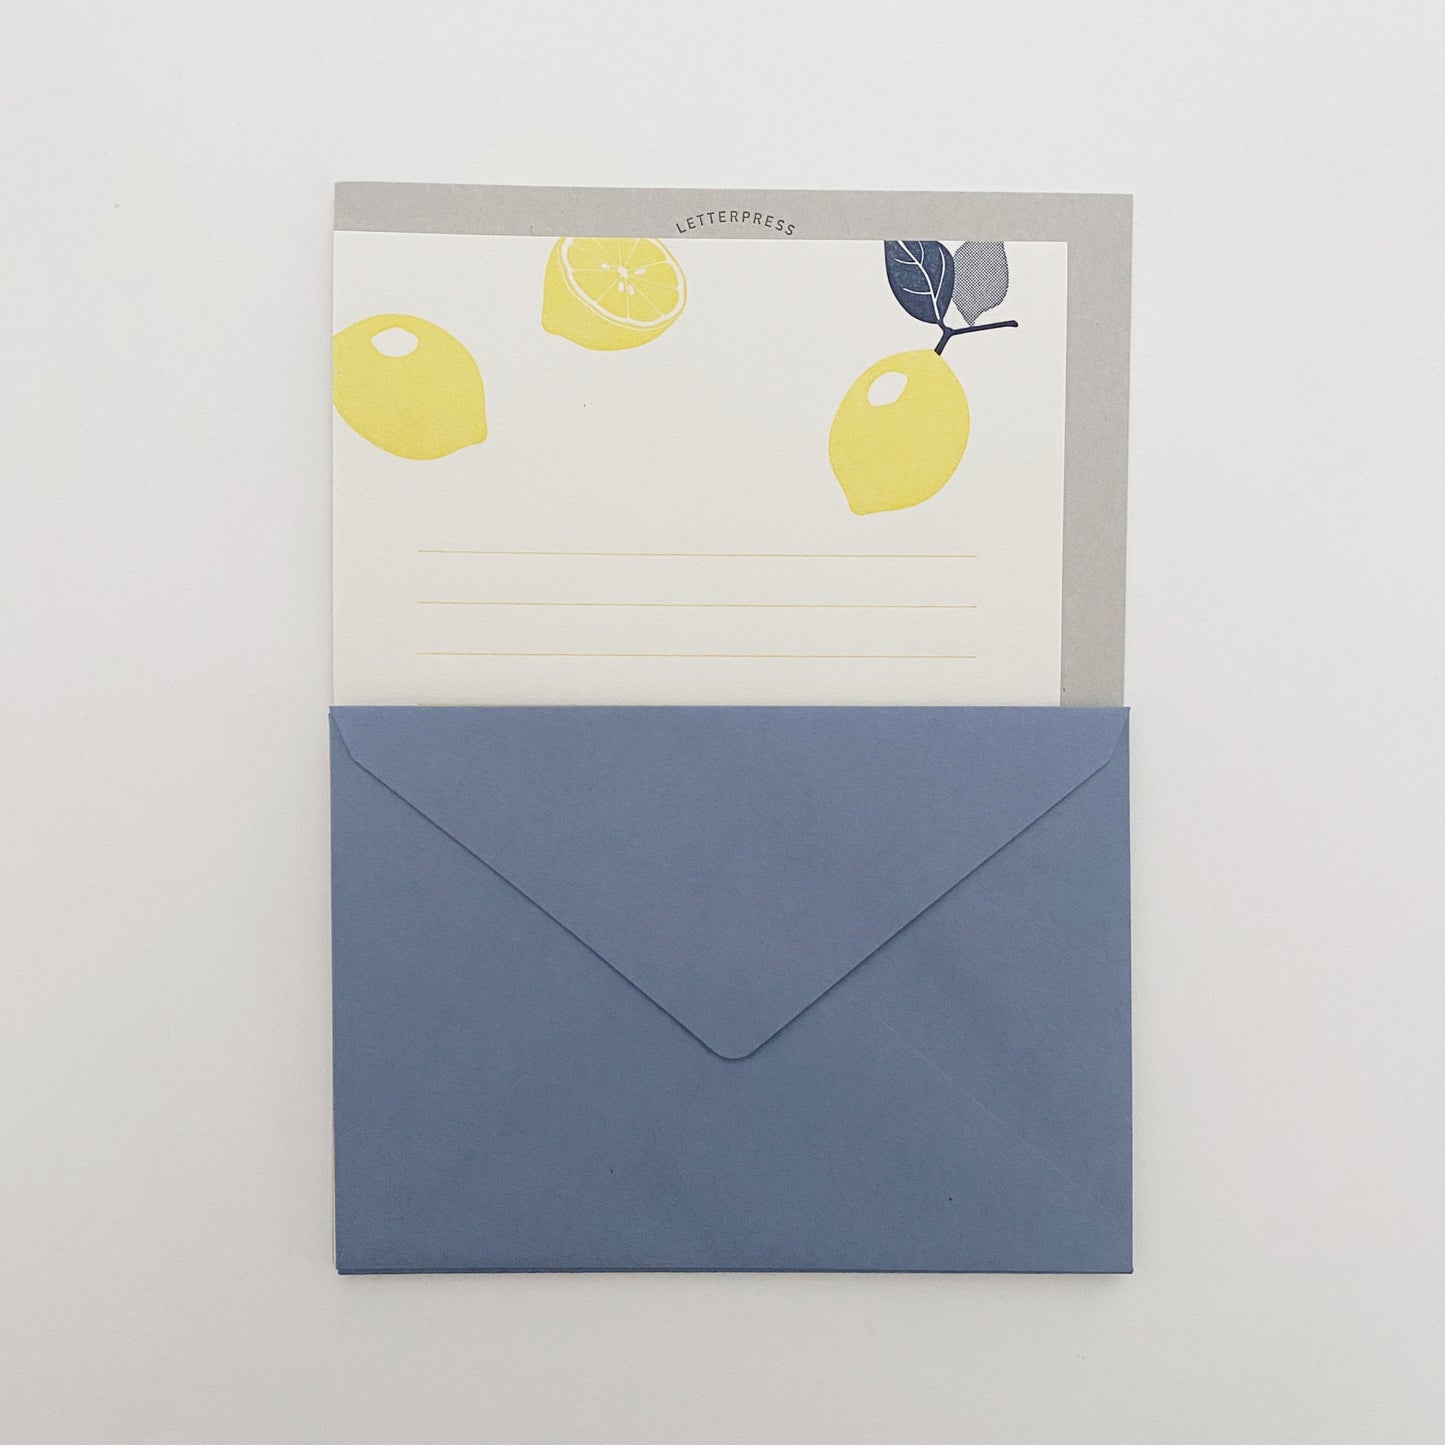 midori : letterpress letter & envelope set